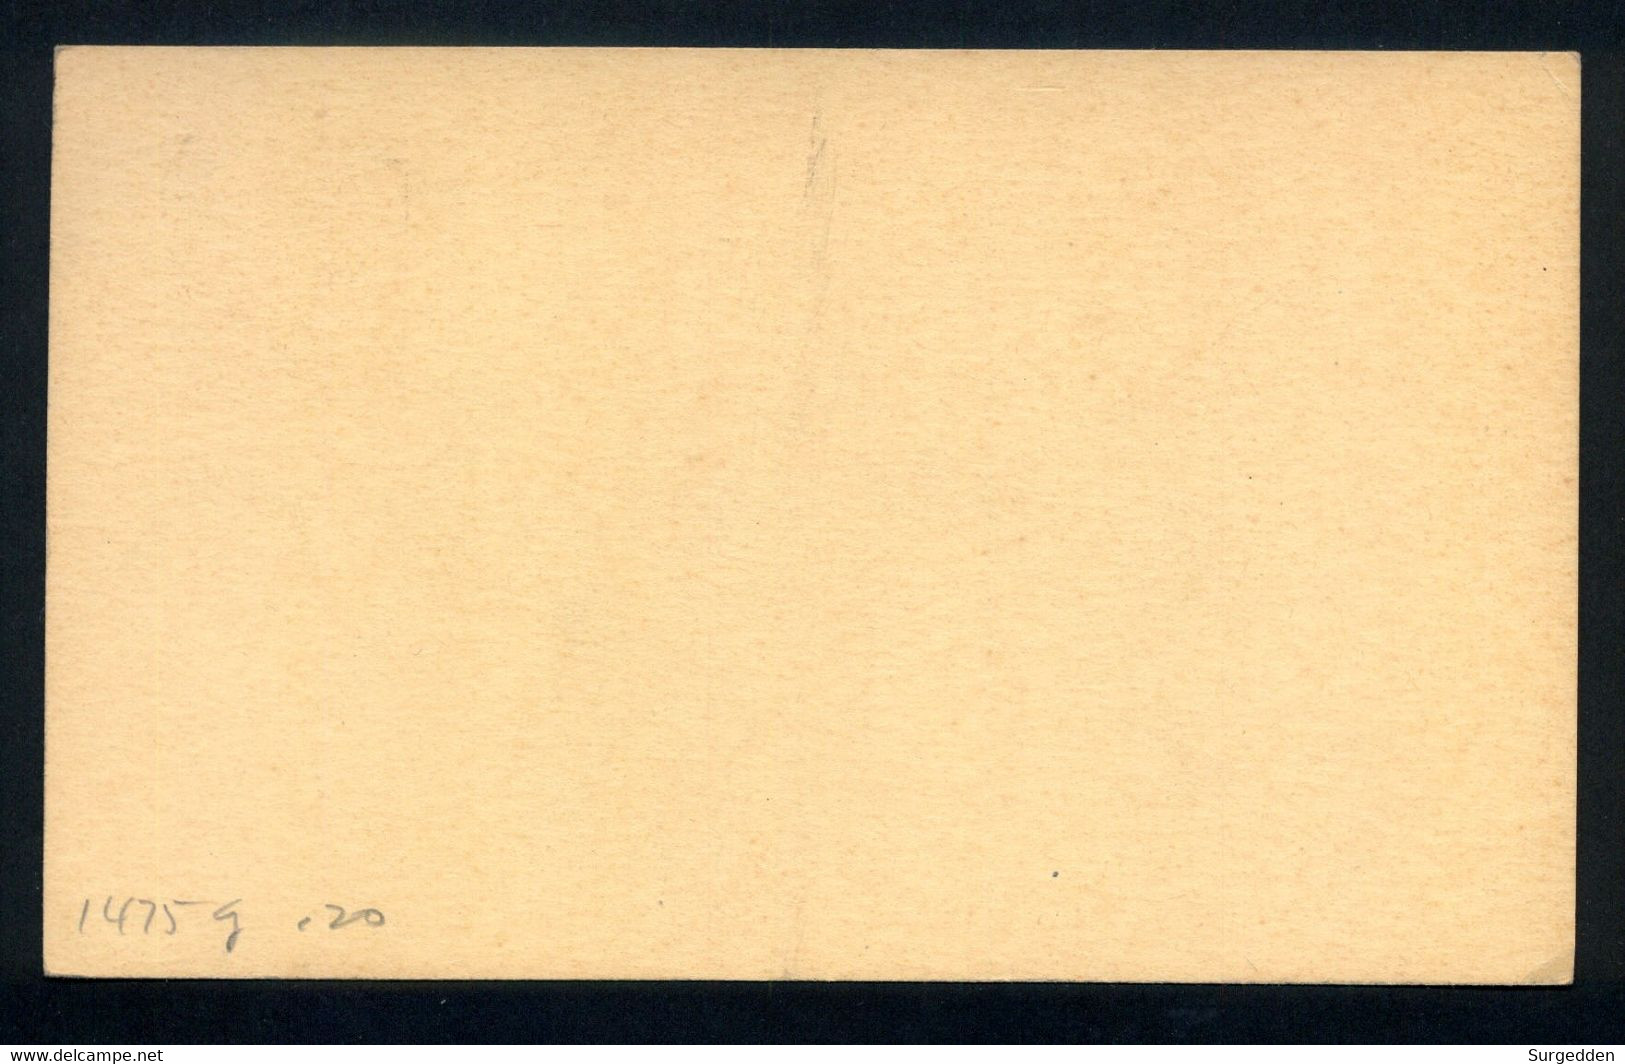 Post Card, Canada Ca. 1900 - 1903-1954 Könige